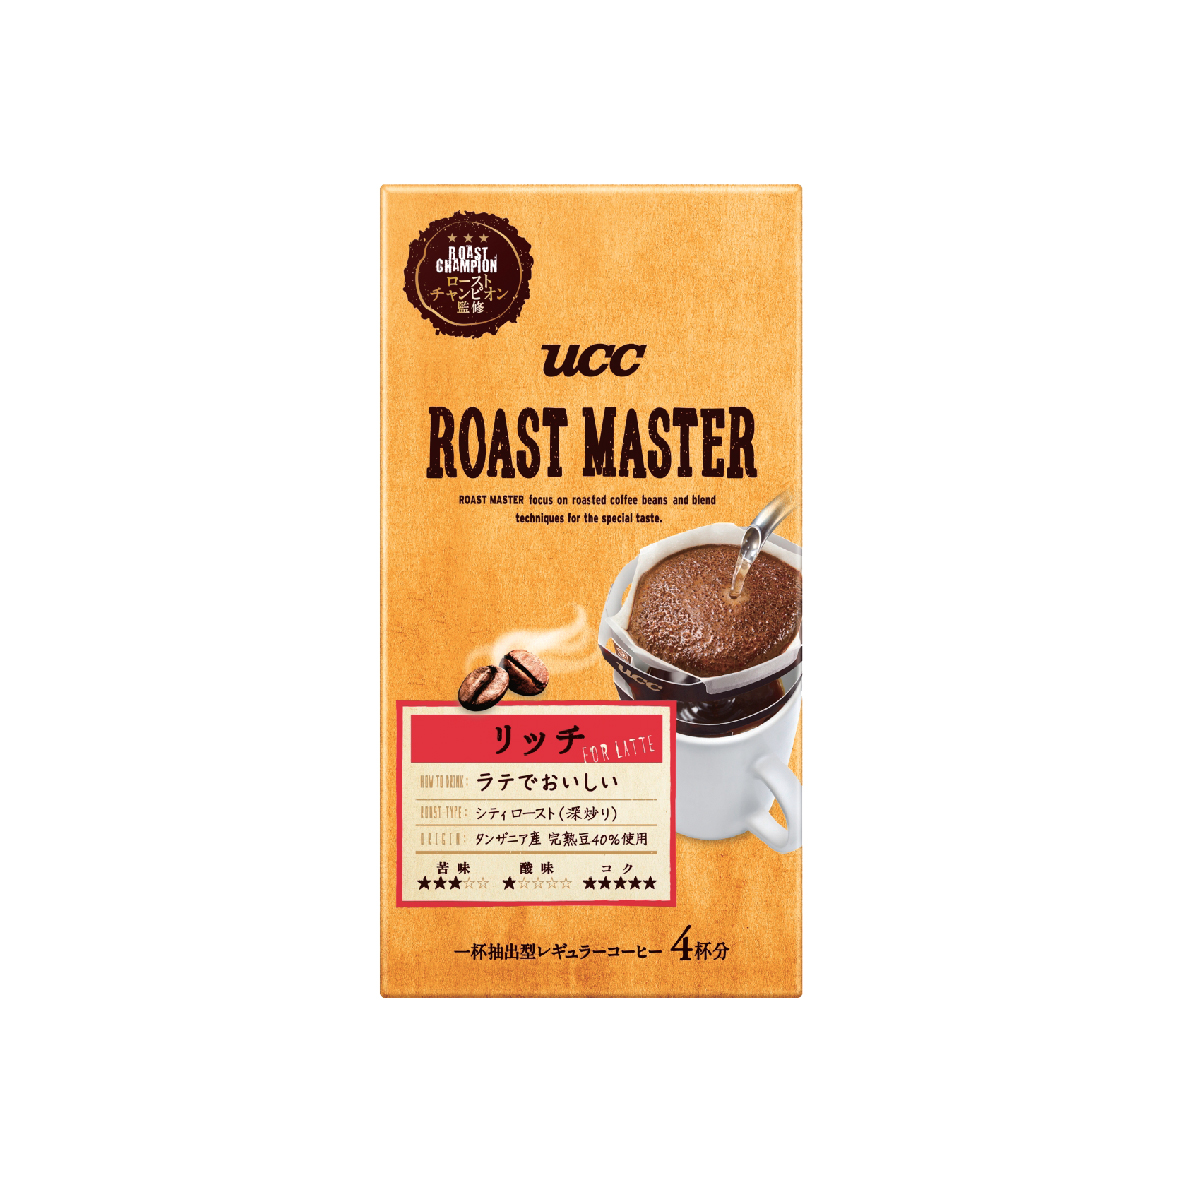 UCC Roast Master Rich Coffee Blend Drip Coffee